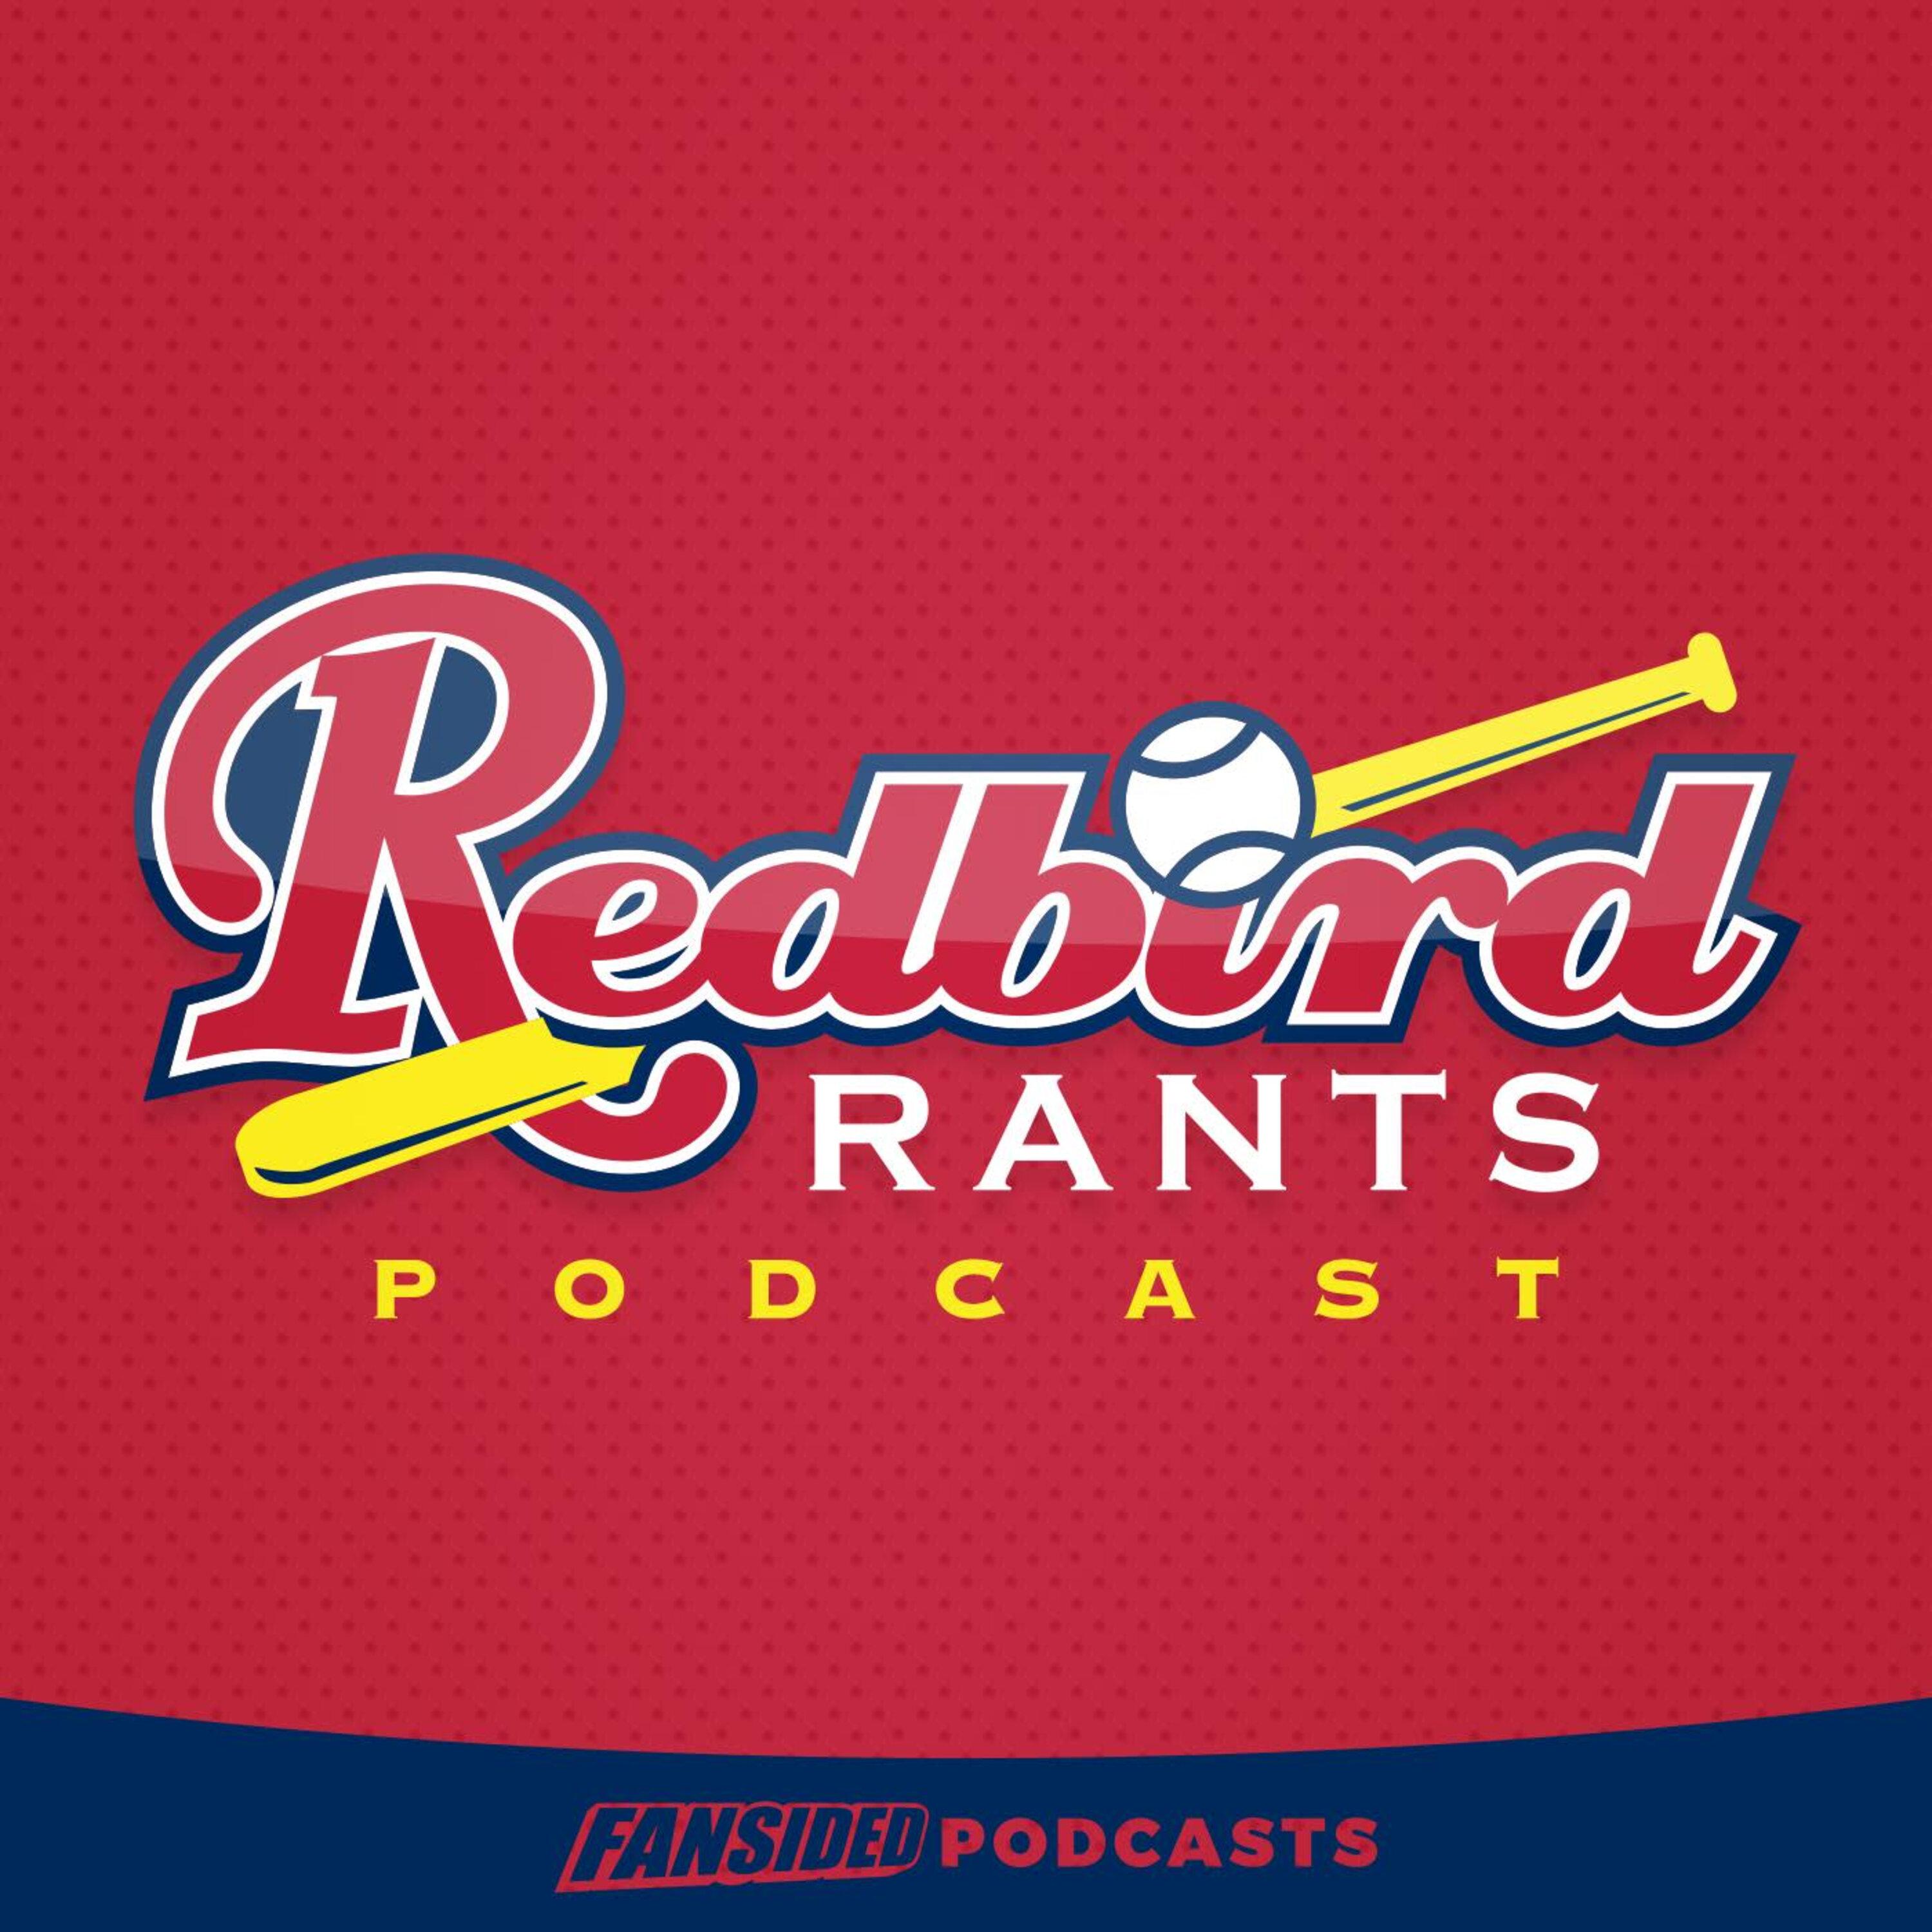 Redbird Rants Podcast on the St. Louis Cardinals